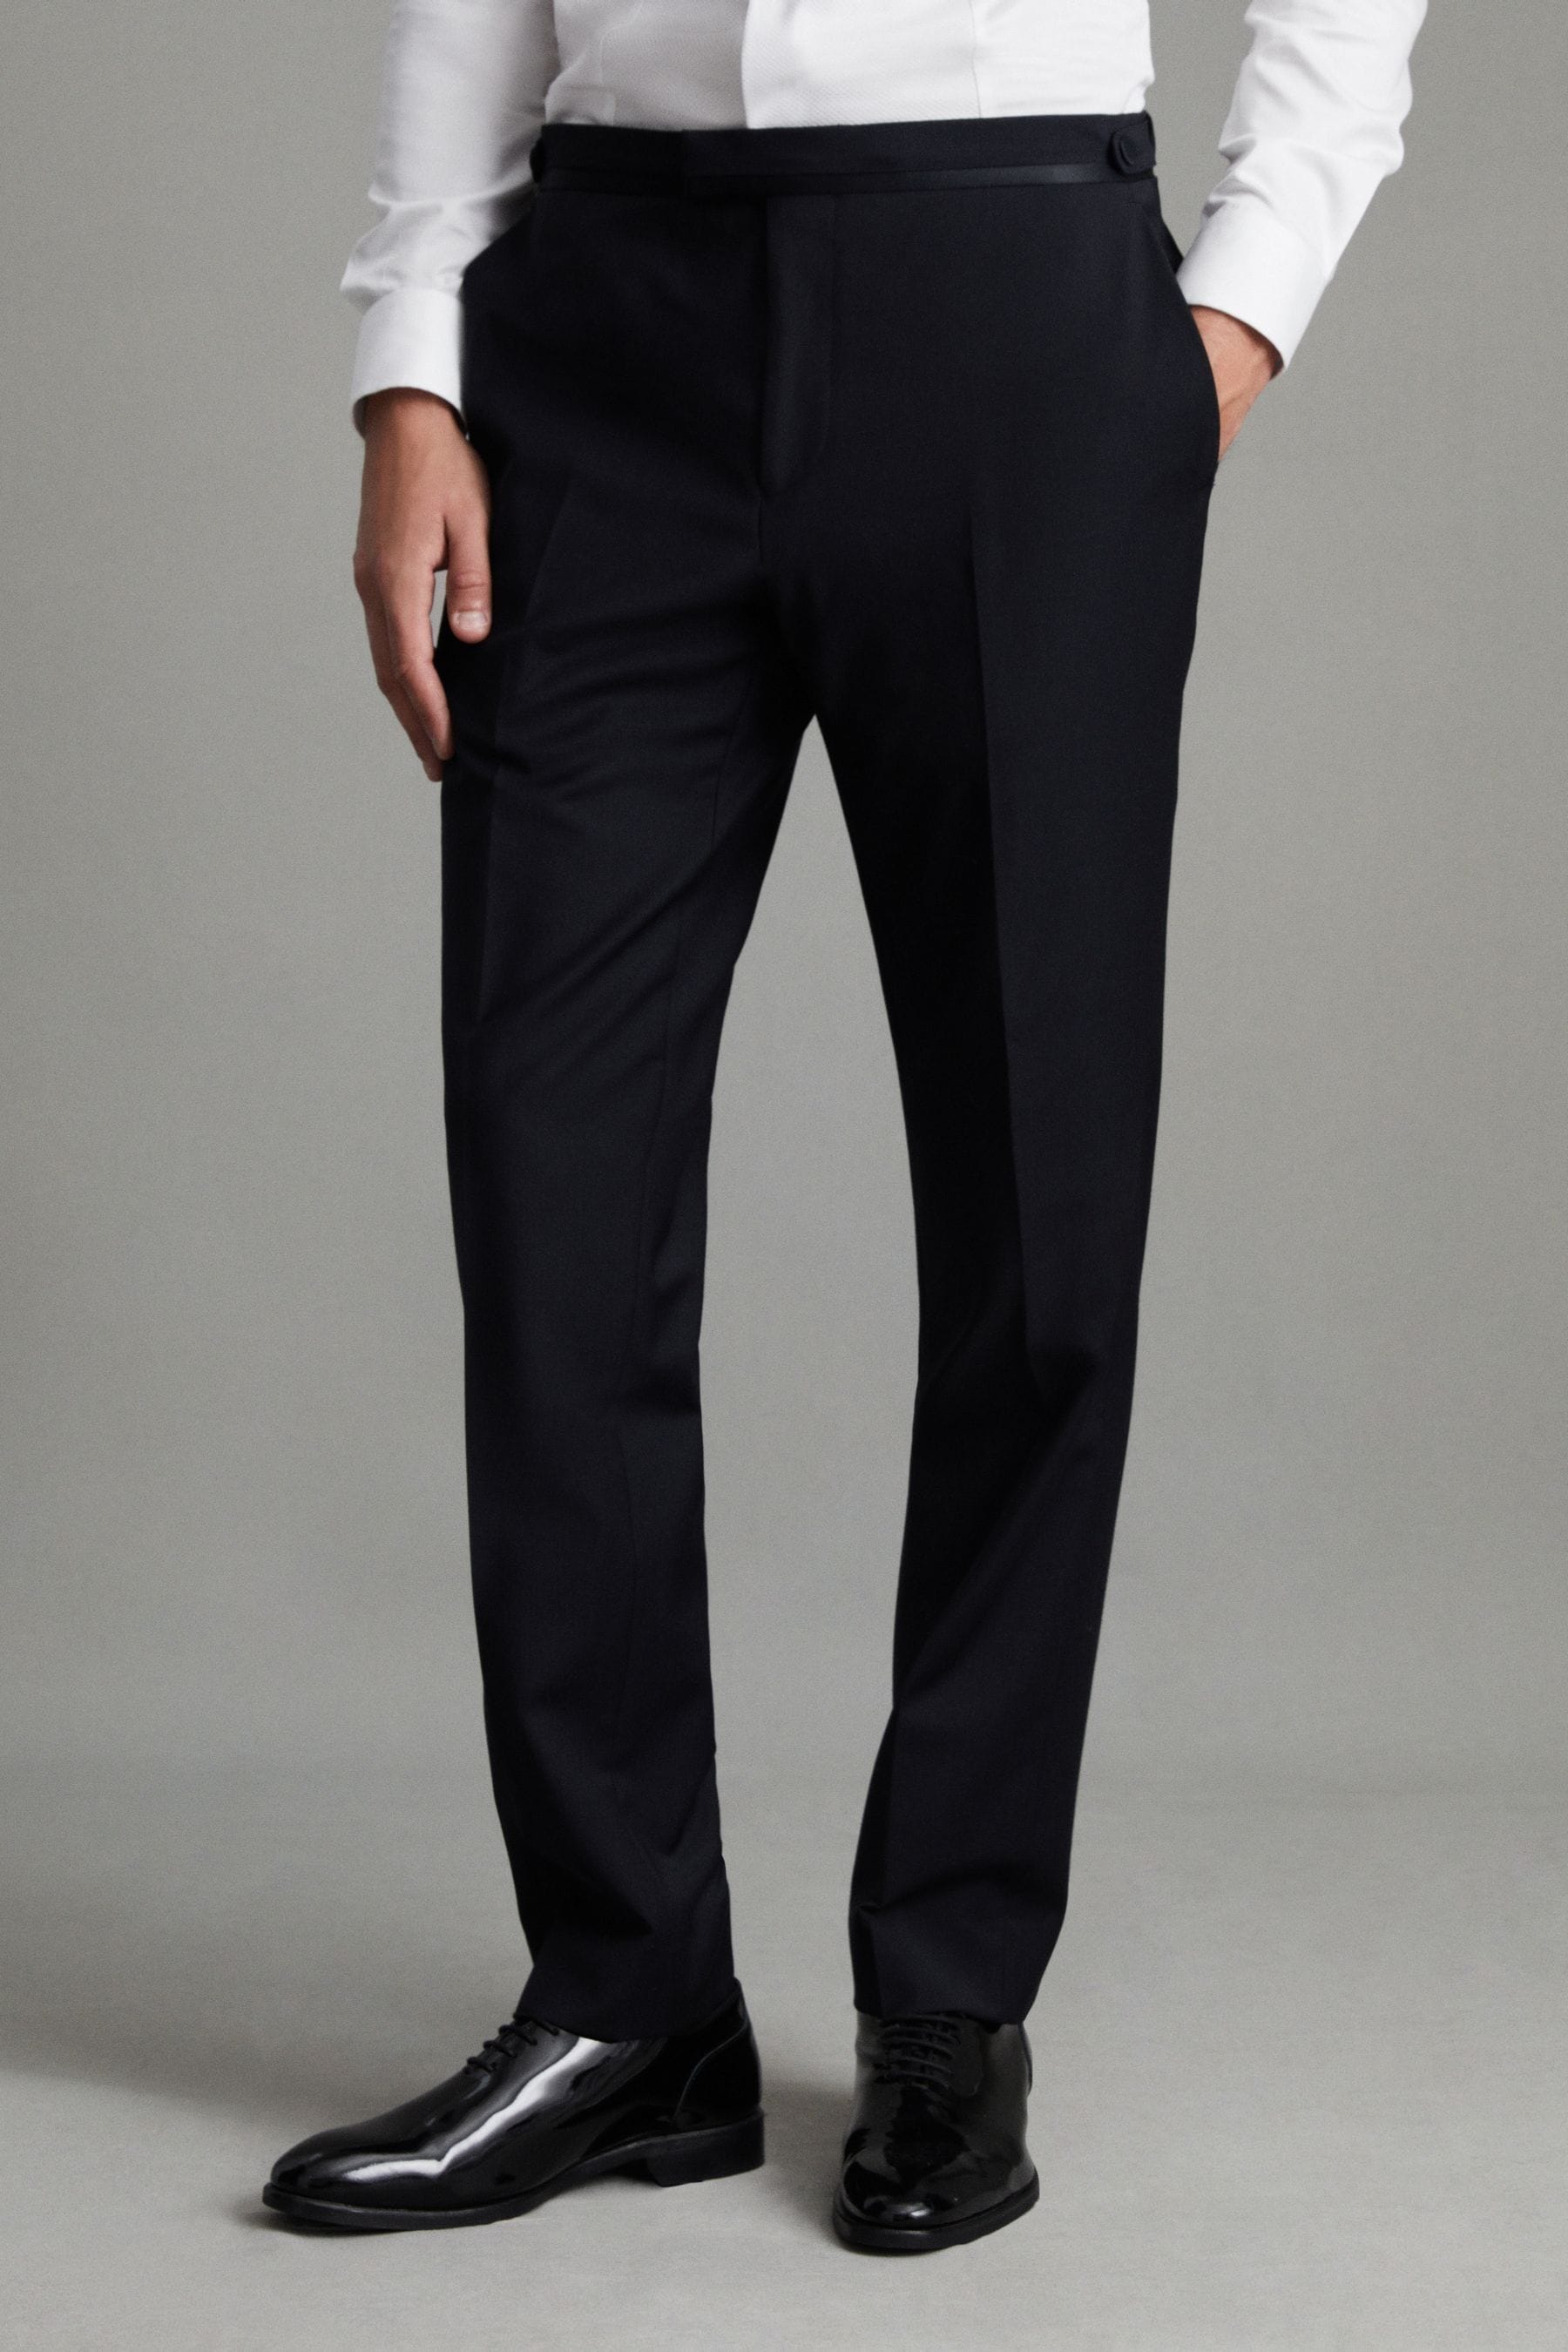 Reiss Poker - Navy Modern Fit Tuxedo Trousers, 36